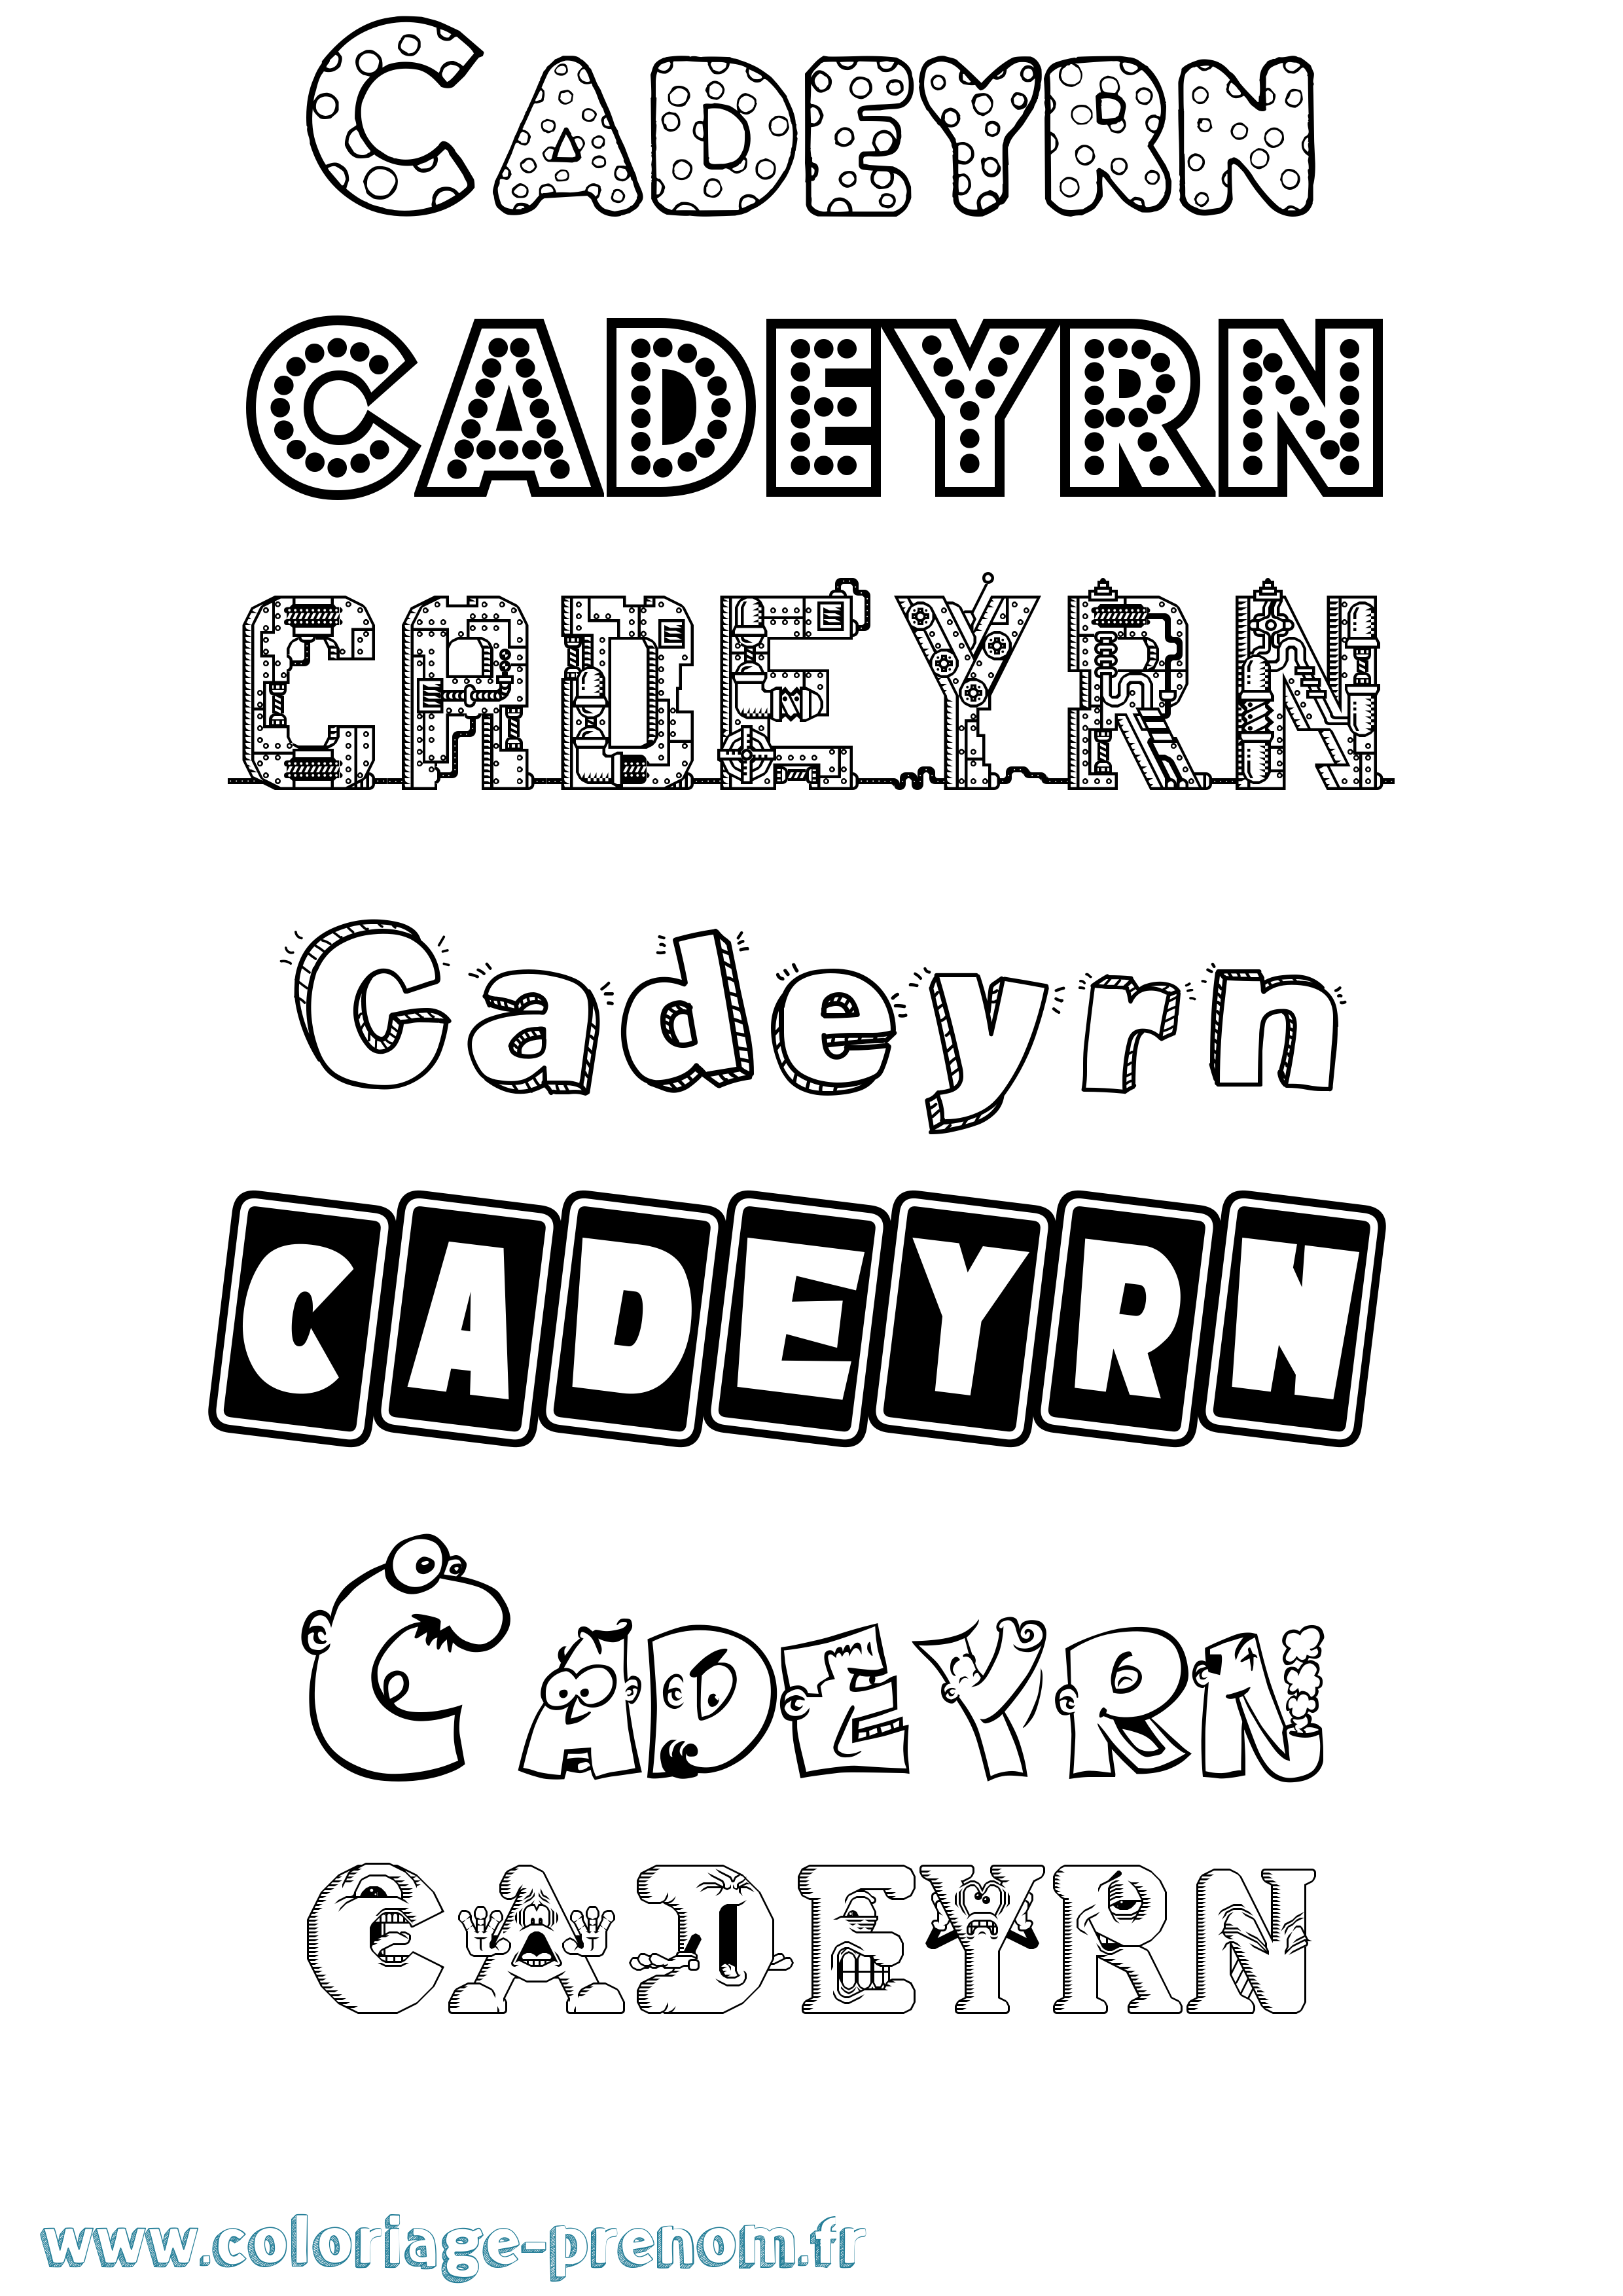 Coloriage prénom Cadeyrn Fun